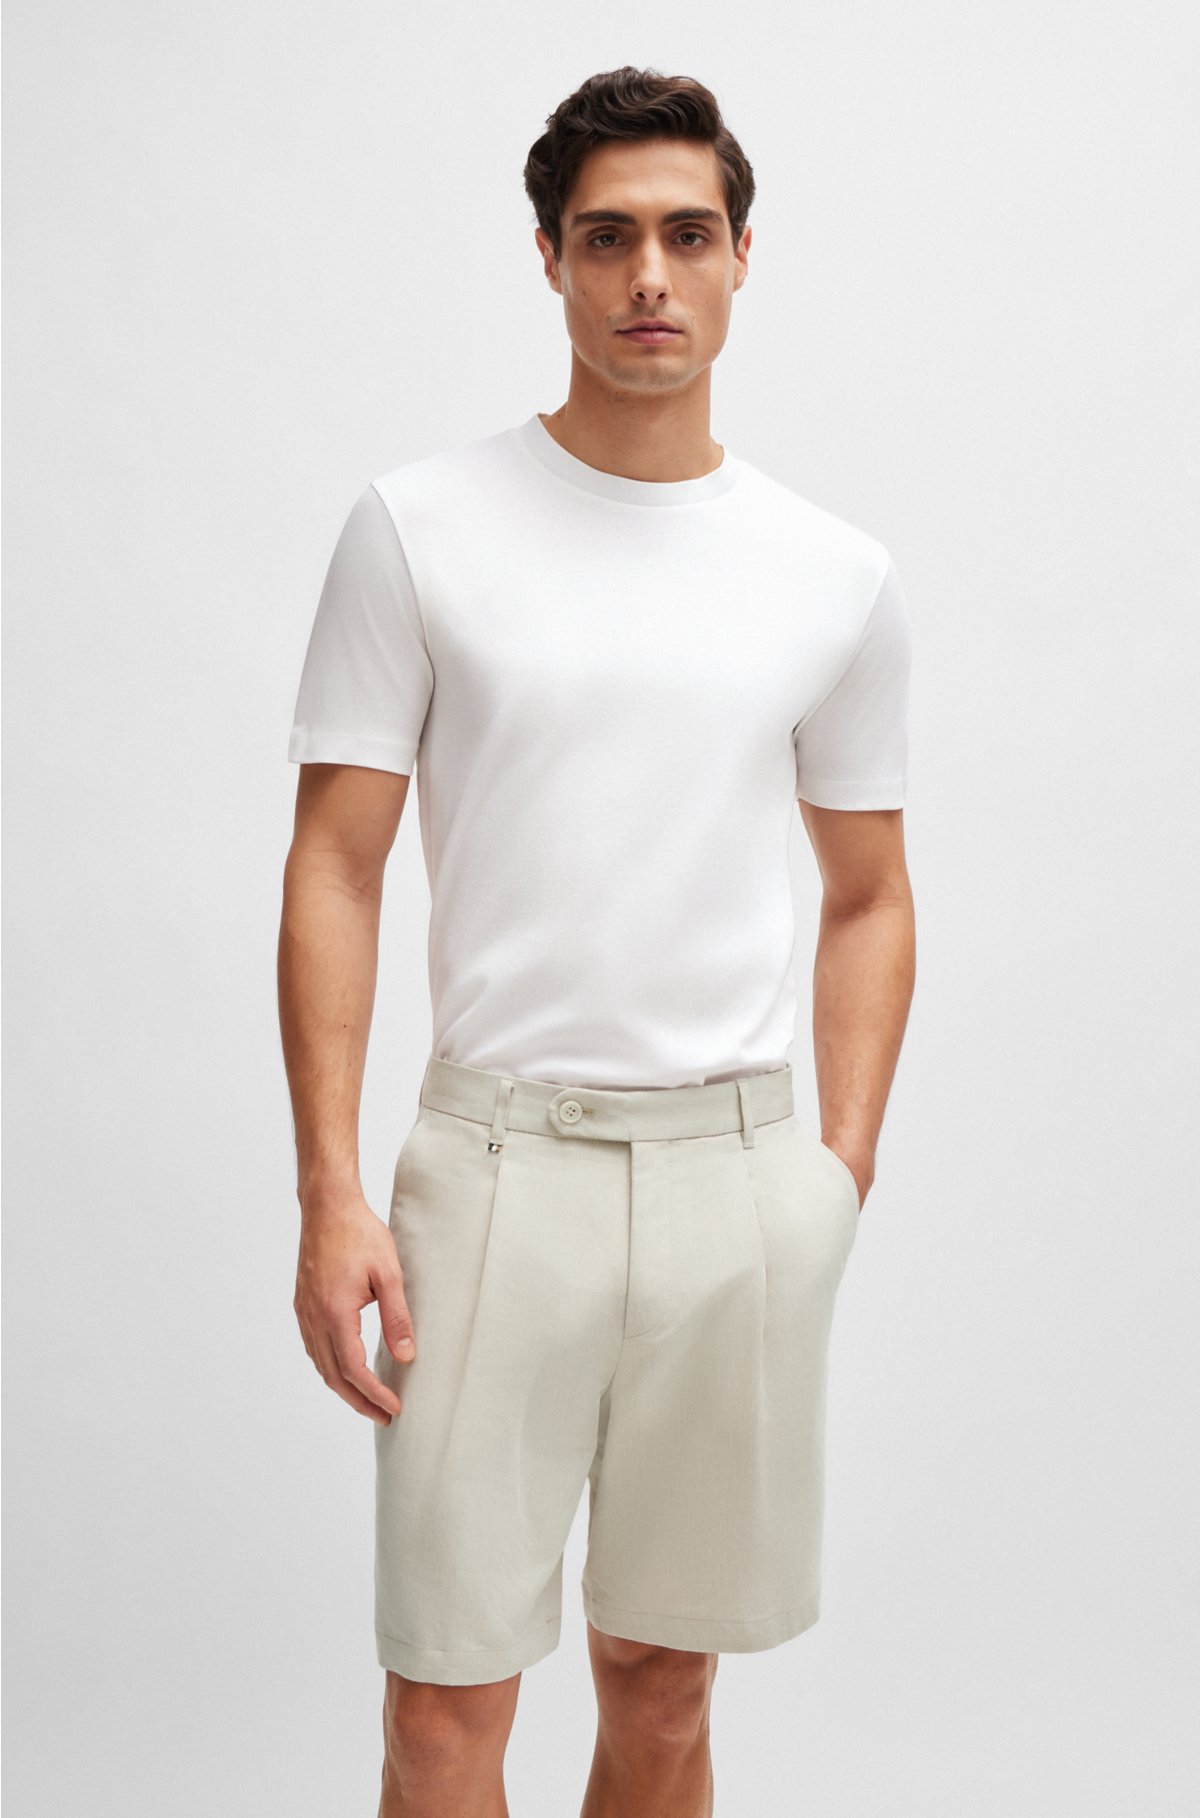 BOSS - Regular-fit crew-neck T-shirt in mercerized cotton